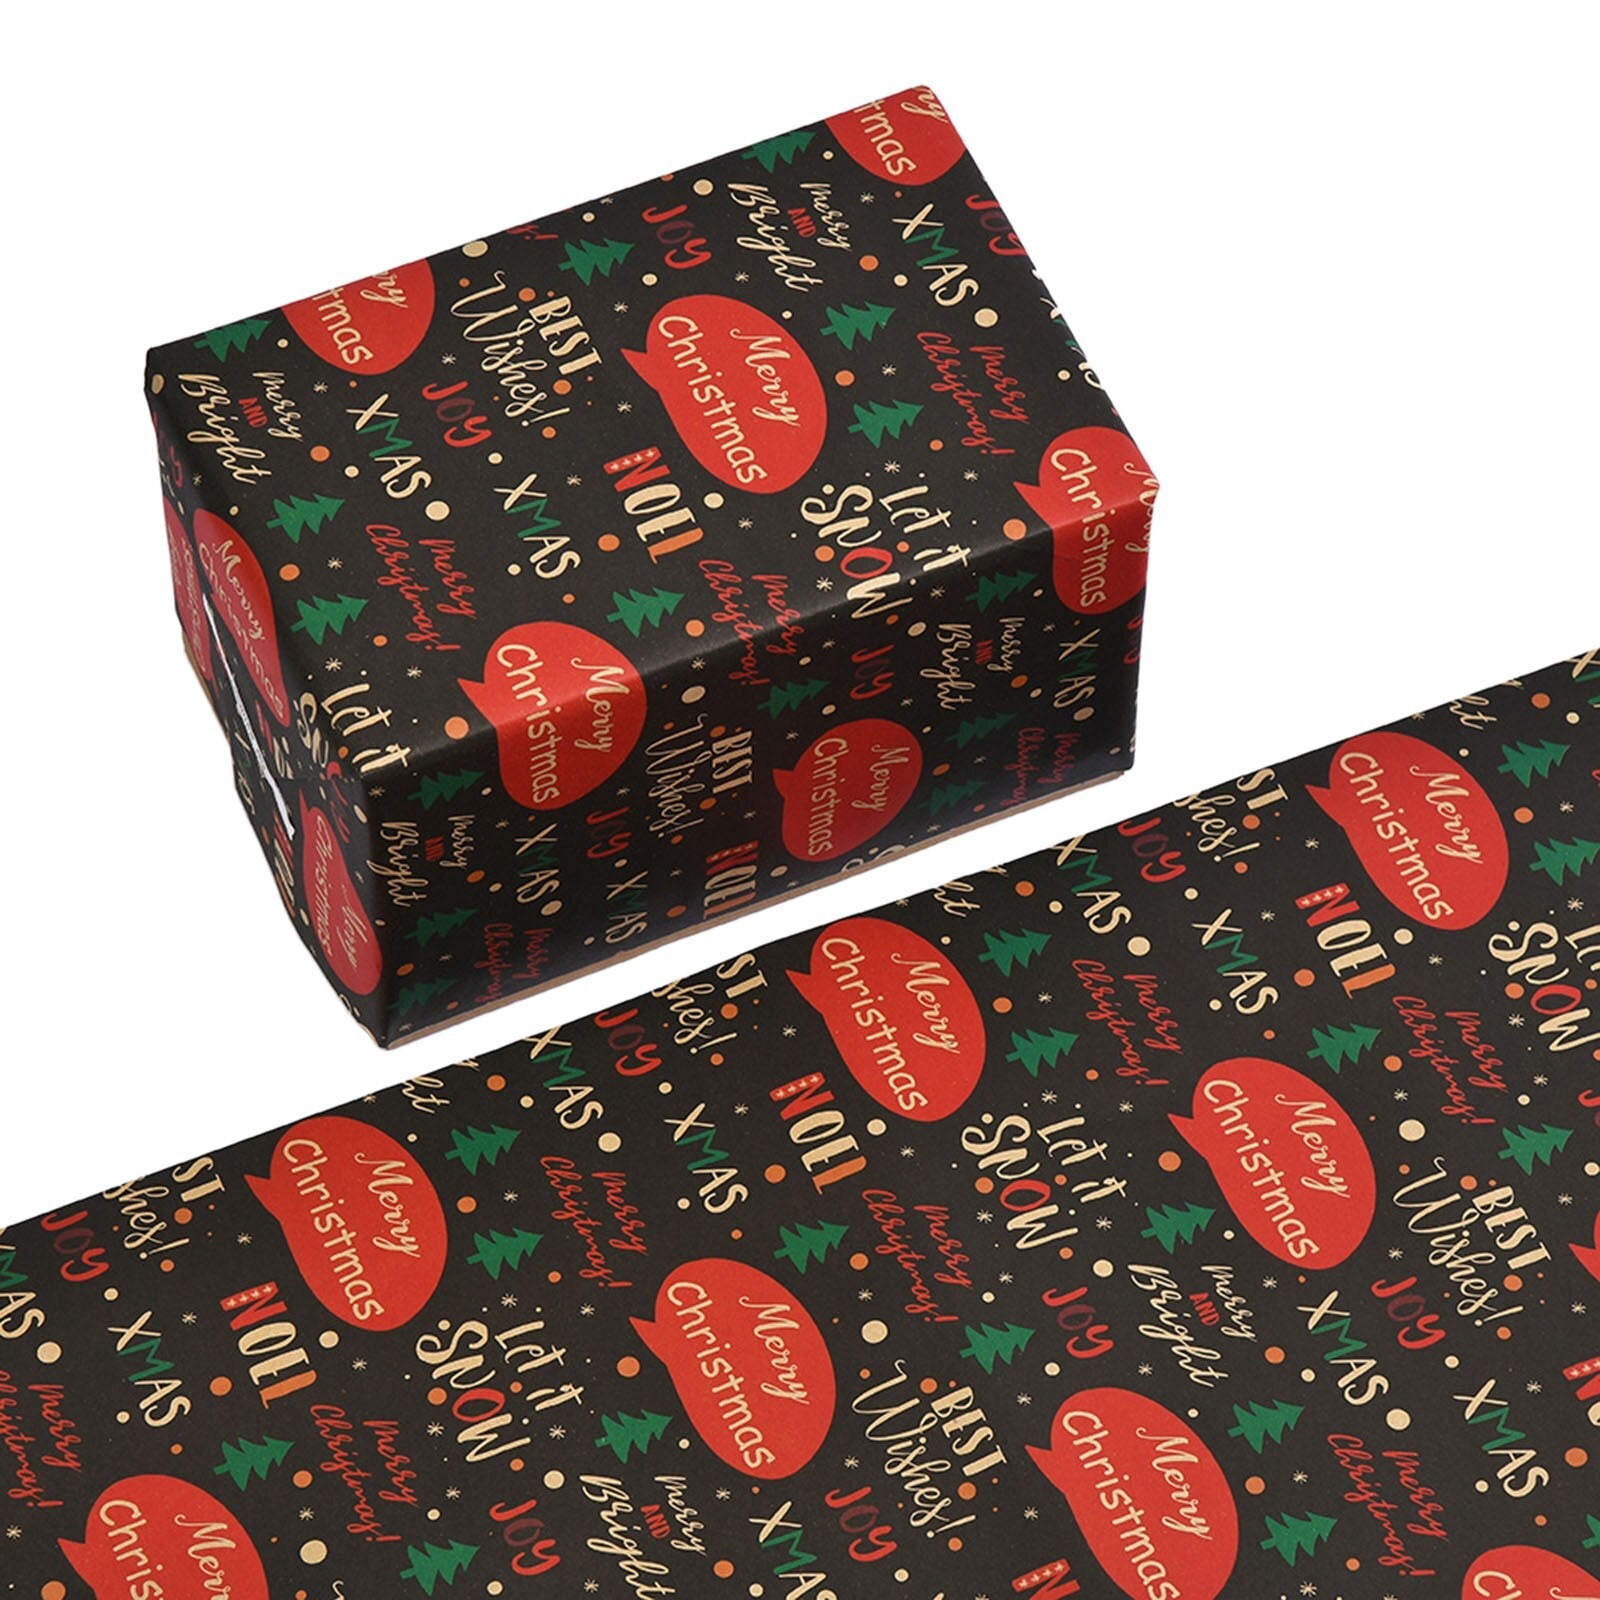 Christmas Gift Wrapping Paper Santa Claus Snowflake Pattern Gift Wrap Artware Kraft Paper Christmas Decorative Gift Packaging